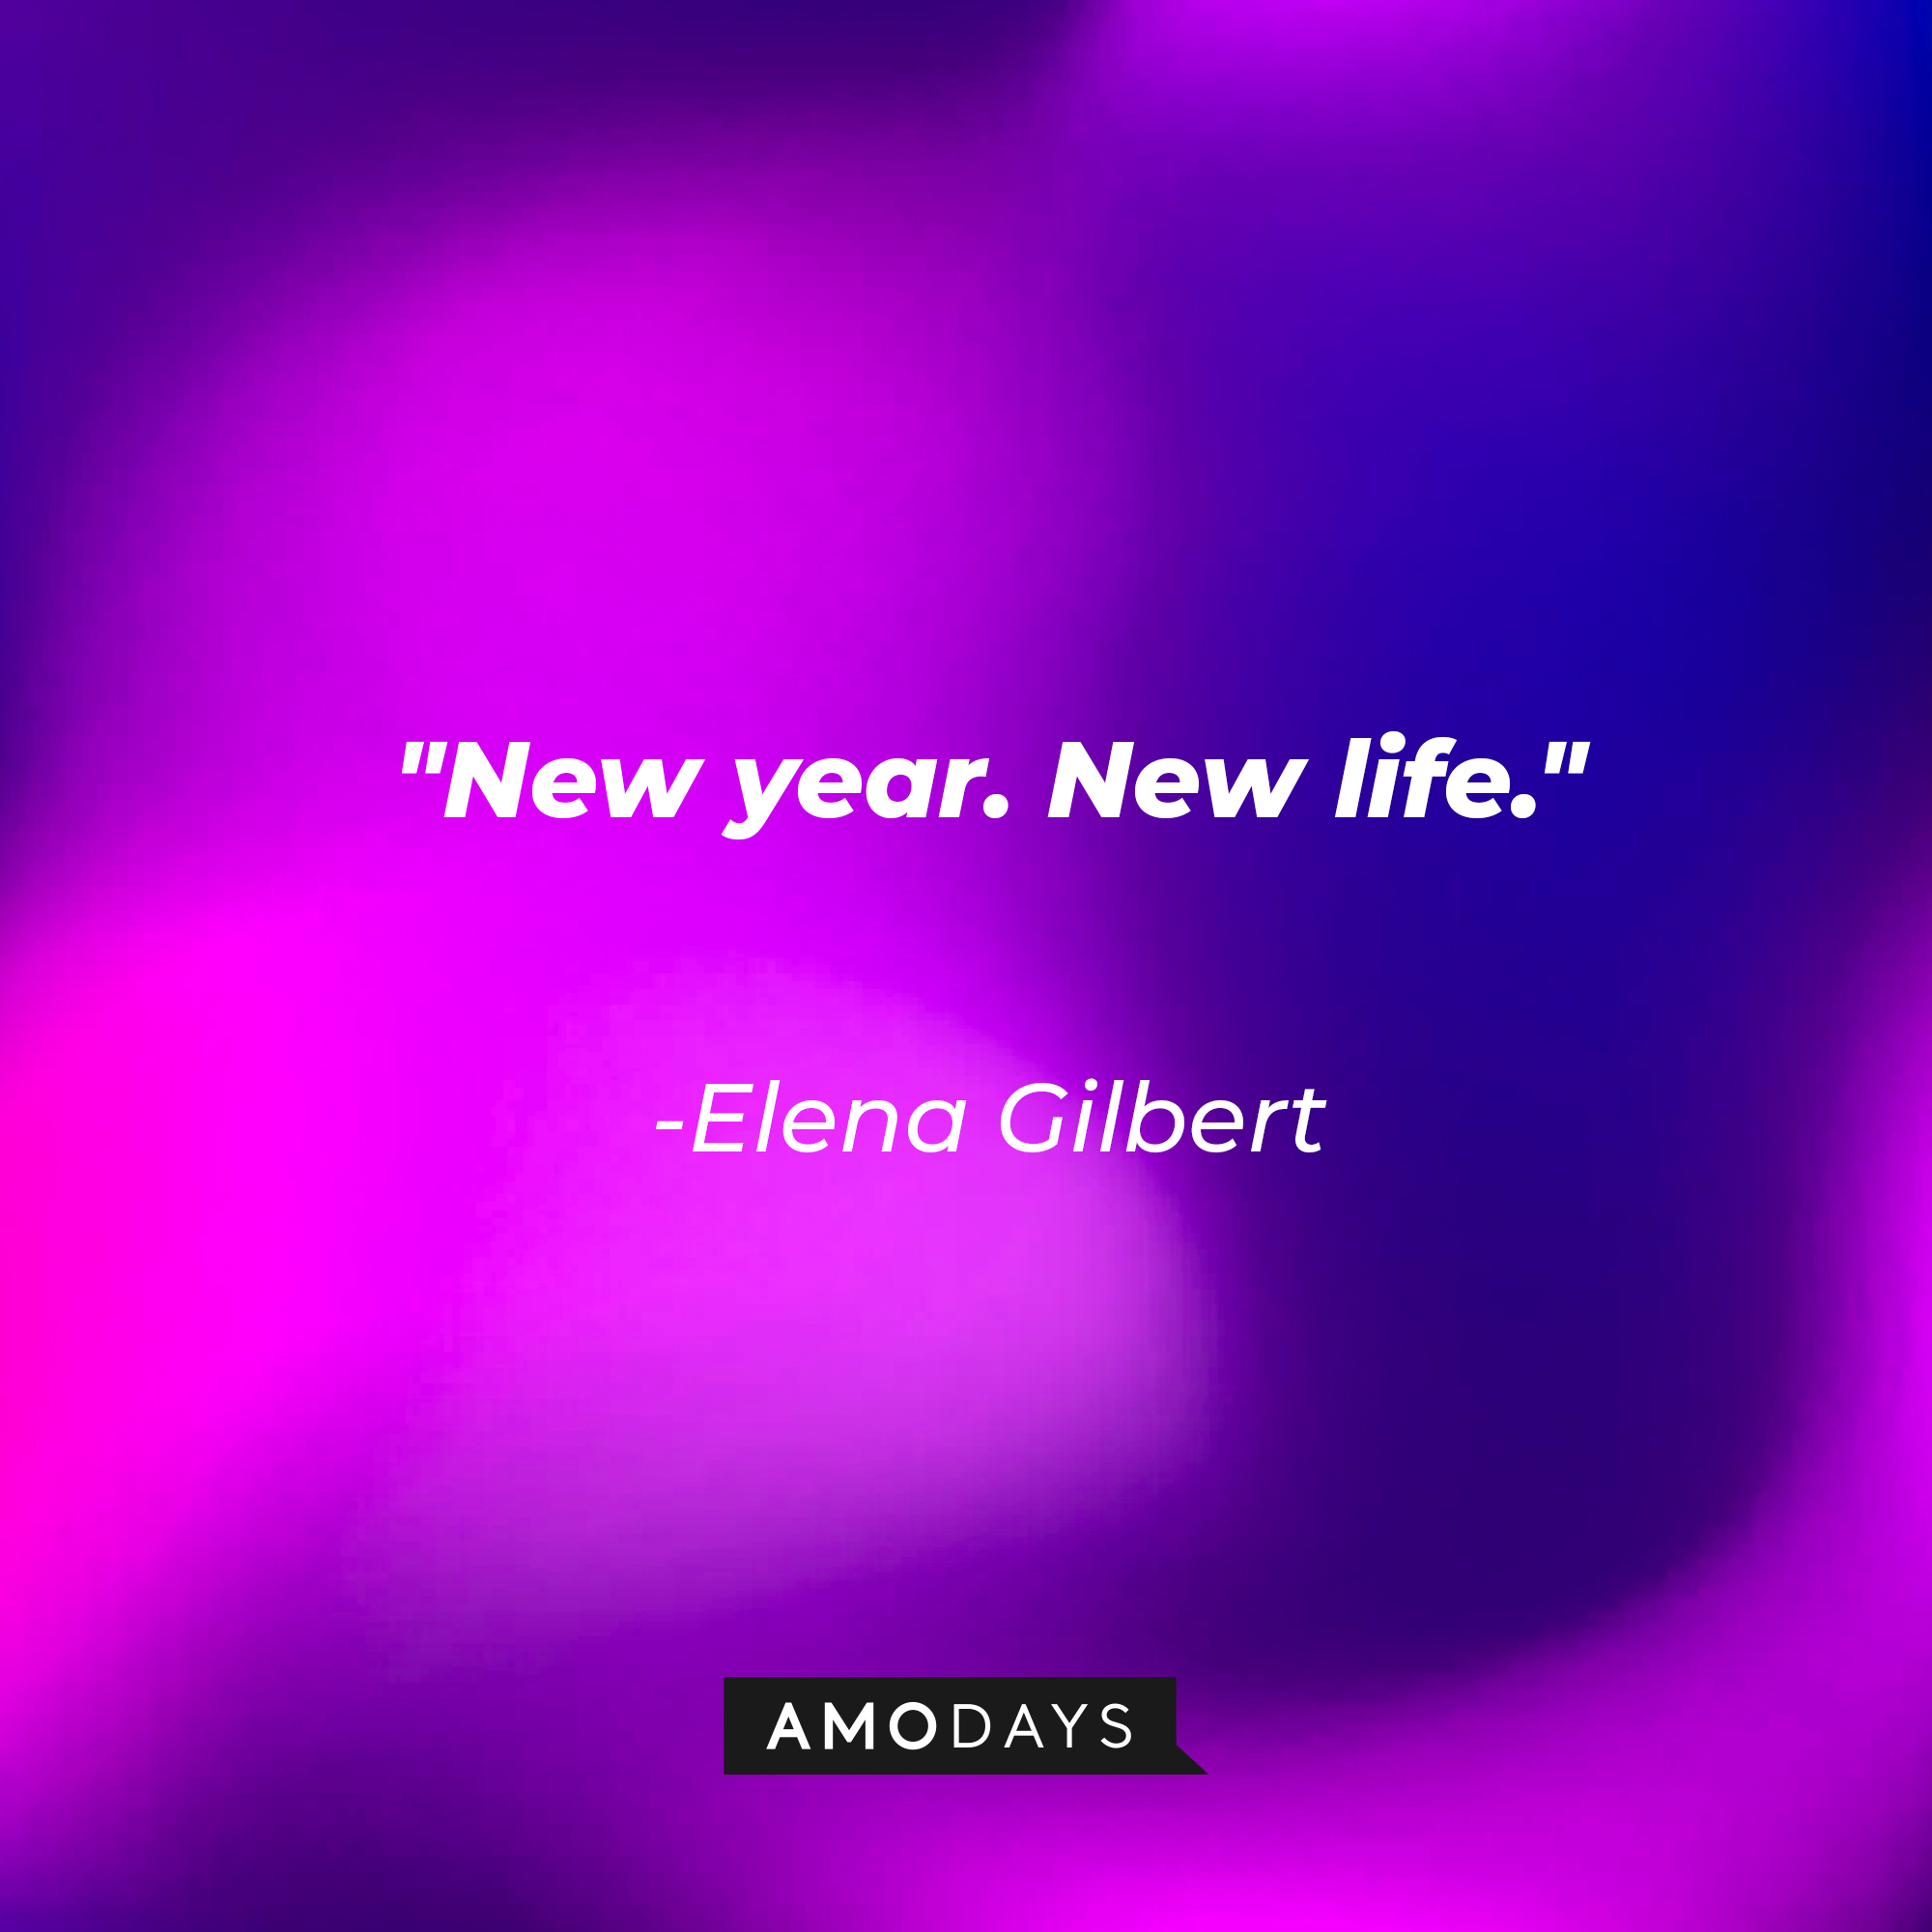 Elena Gilbert's quote: "New year. New life." | Image: AmoDays